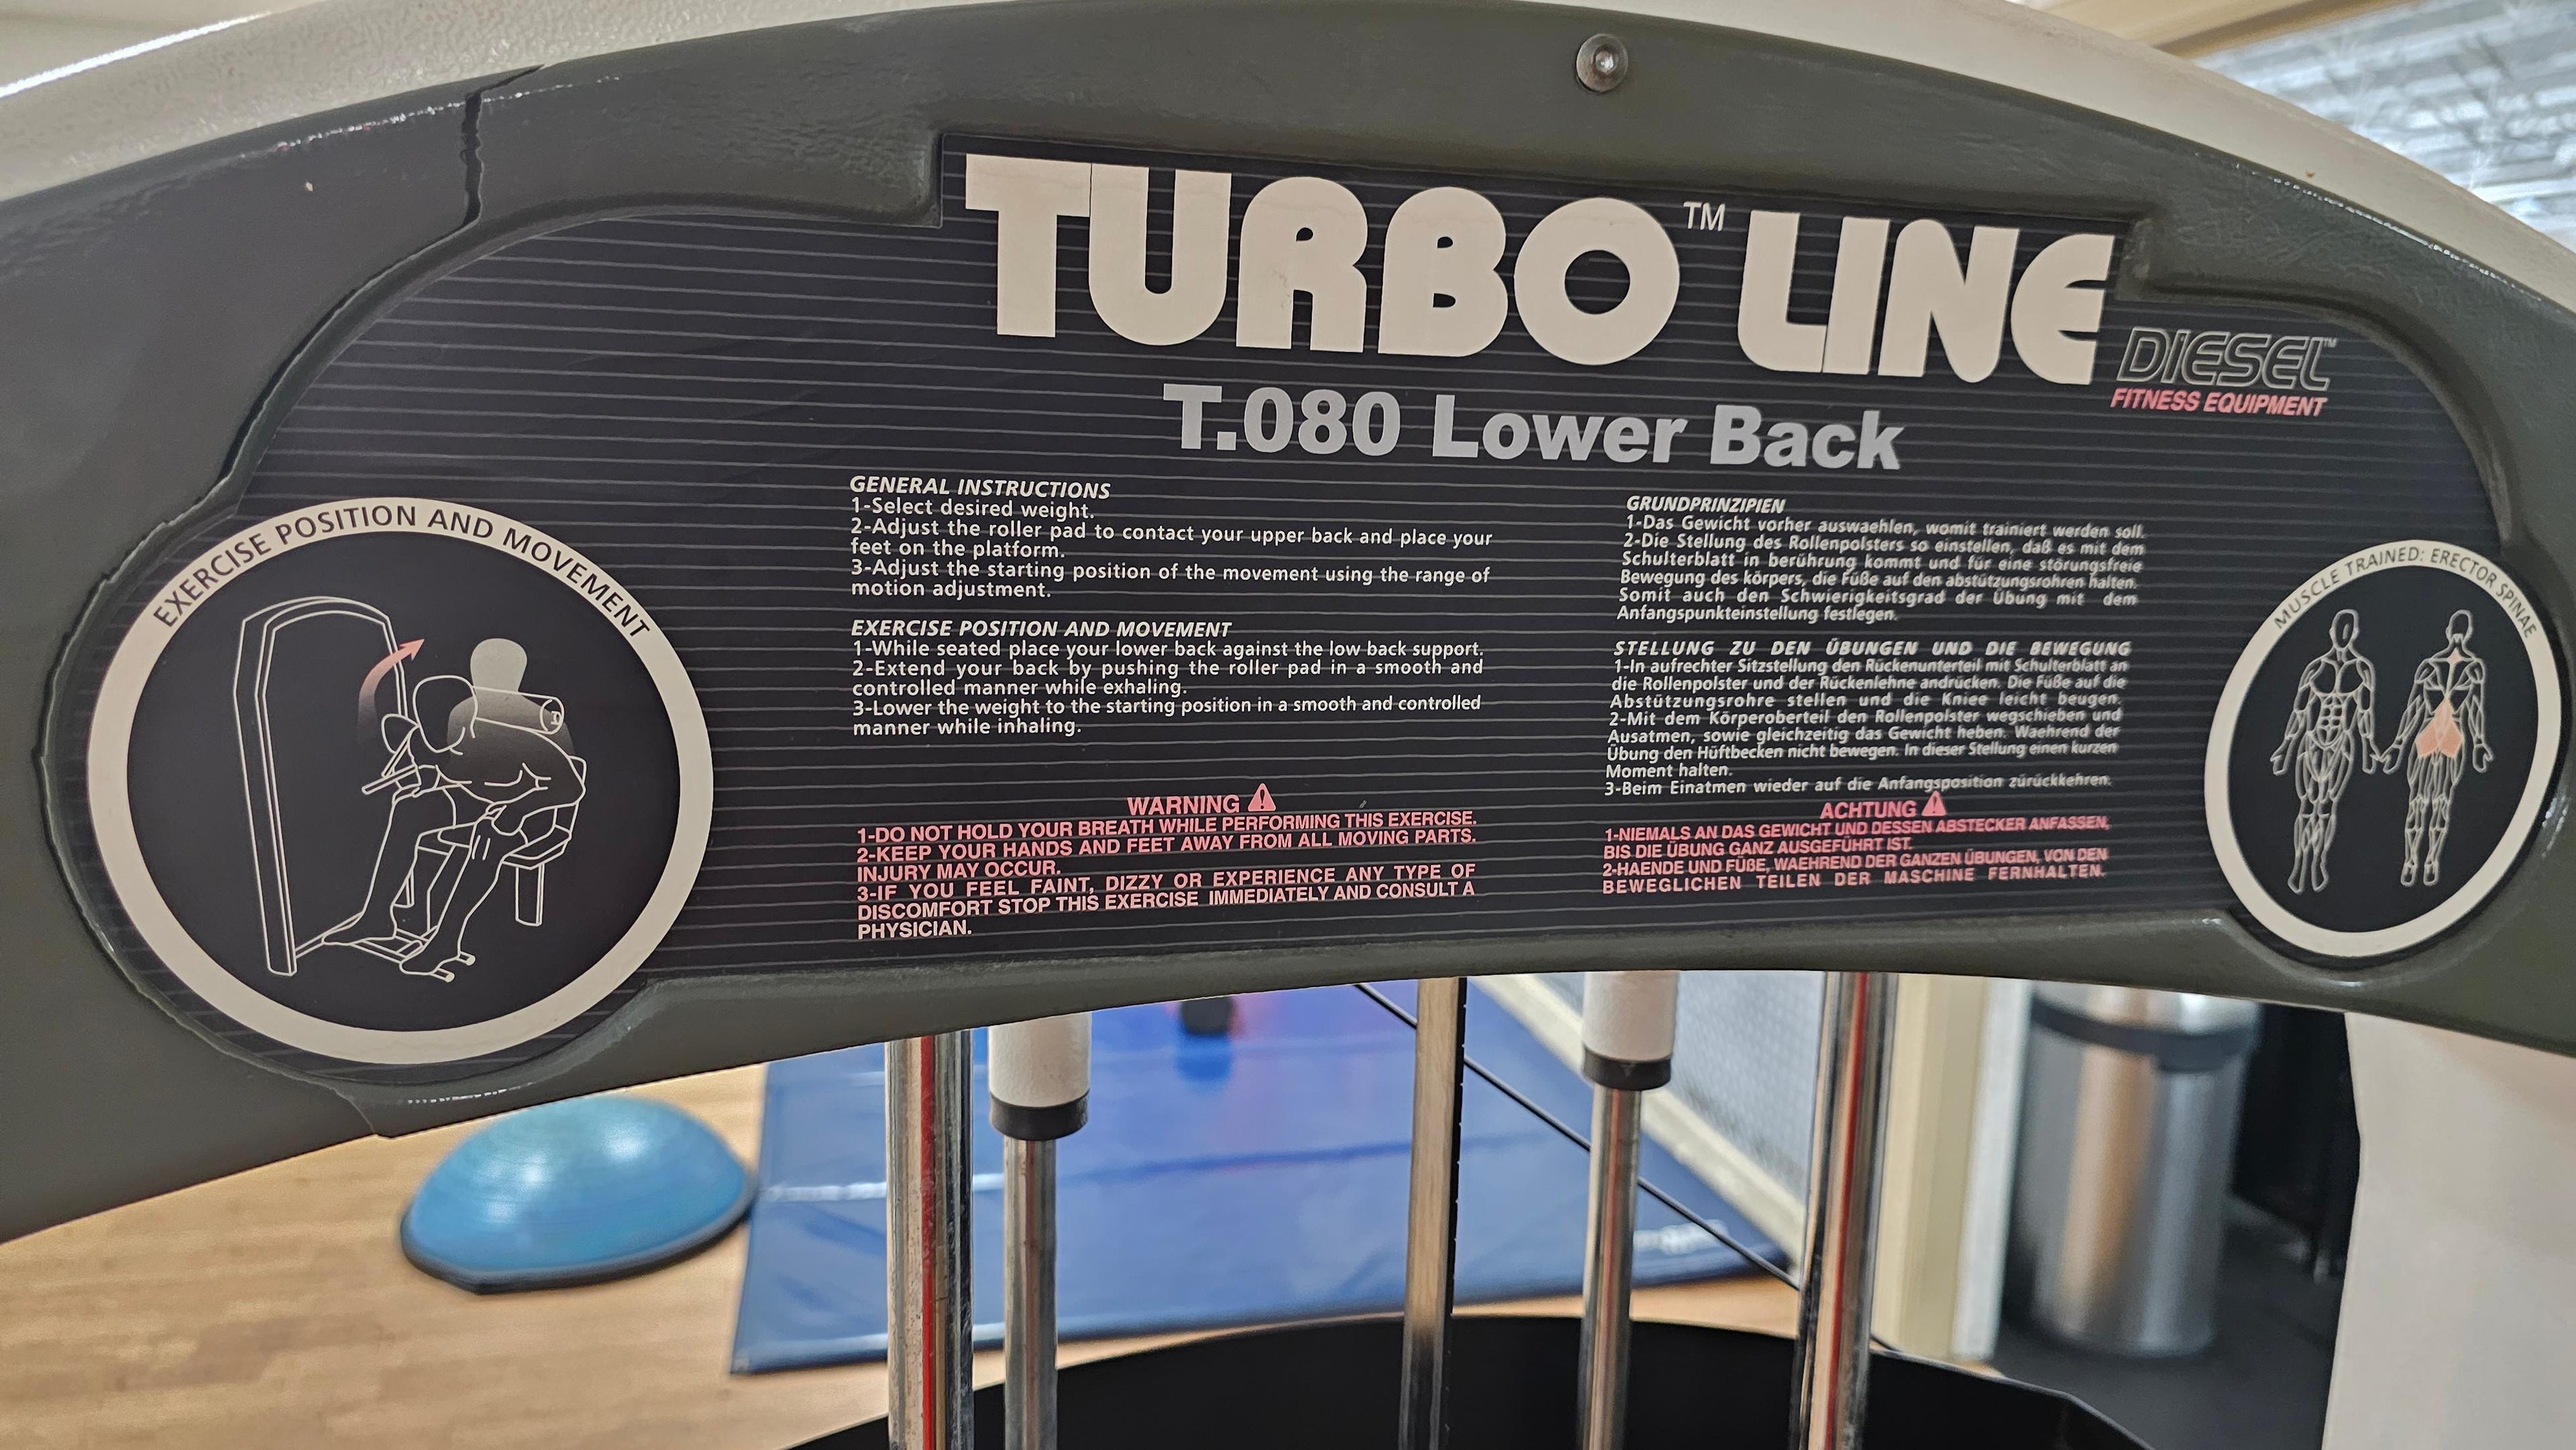 Diesel Turbo Line T.080 Lower Back Machine